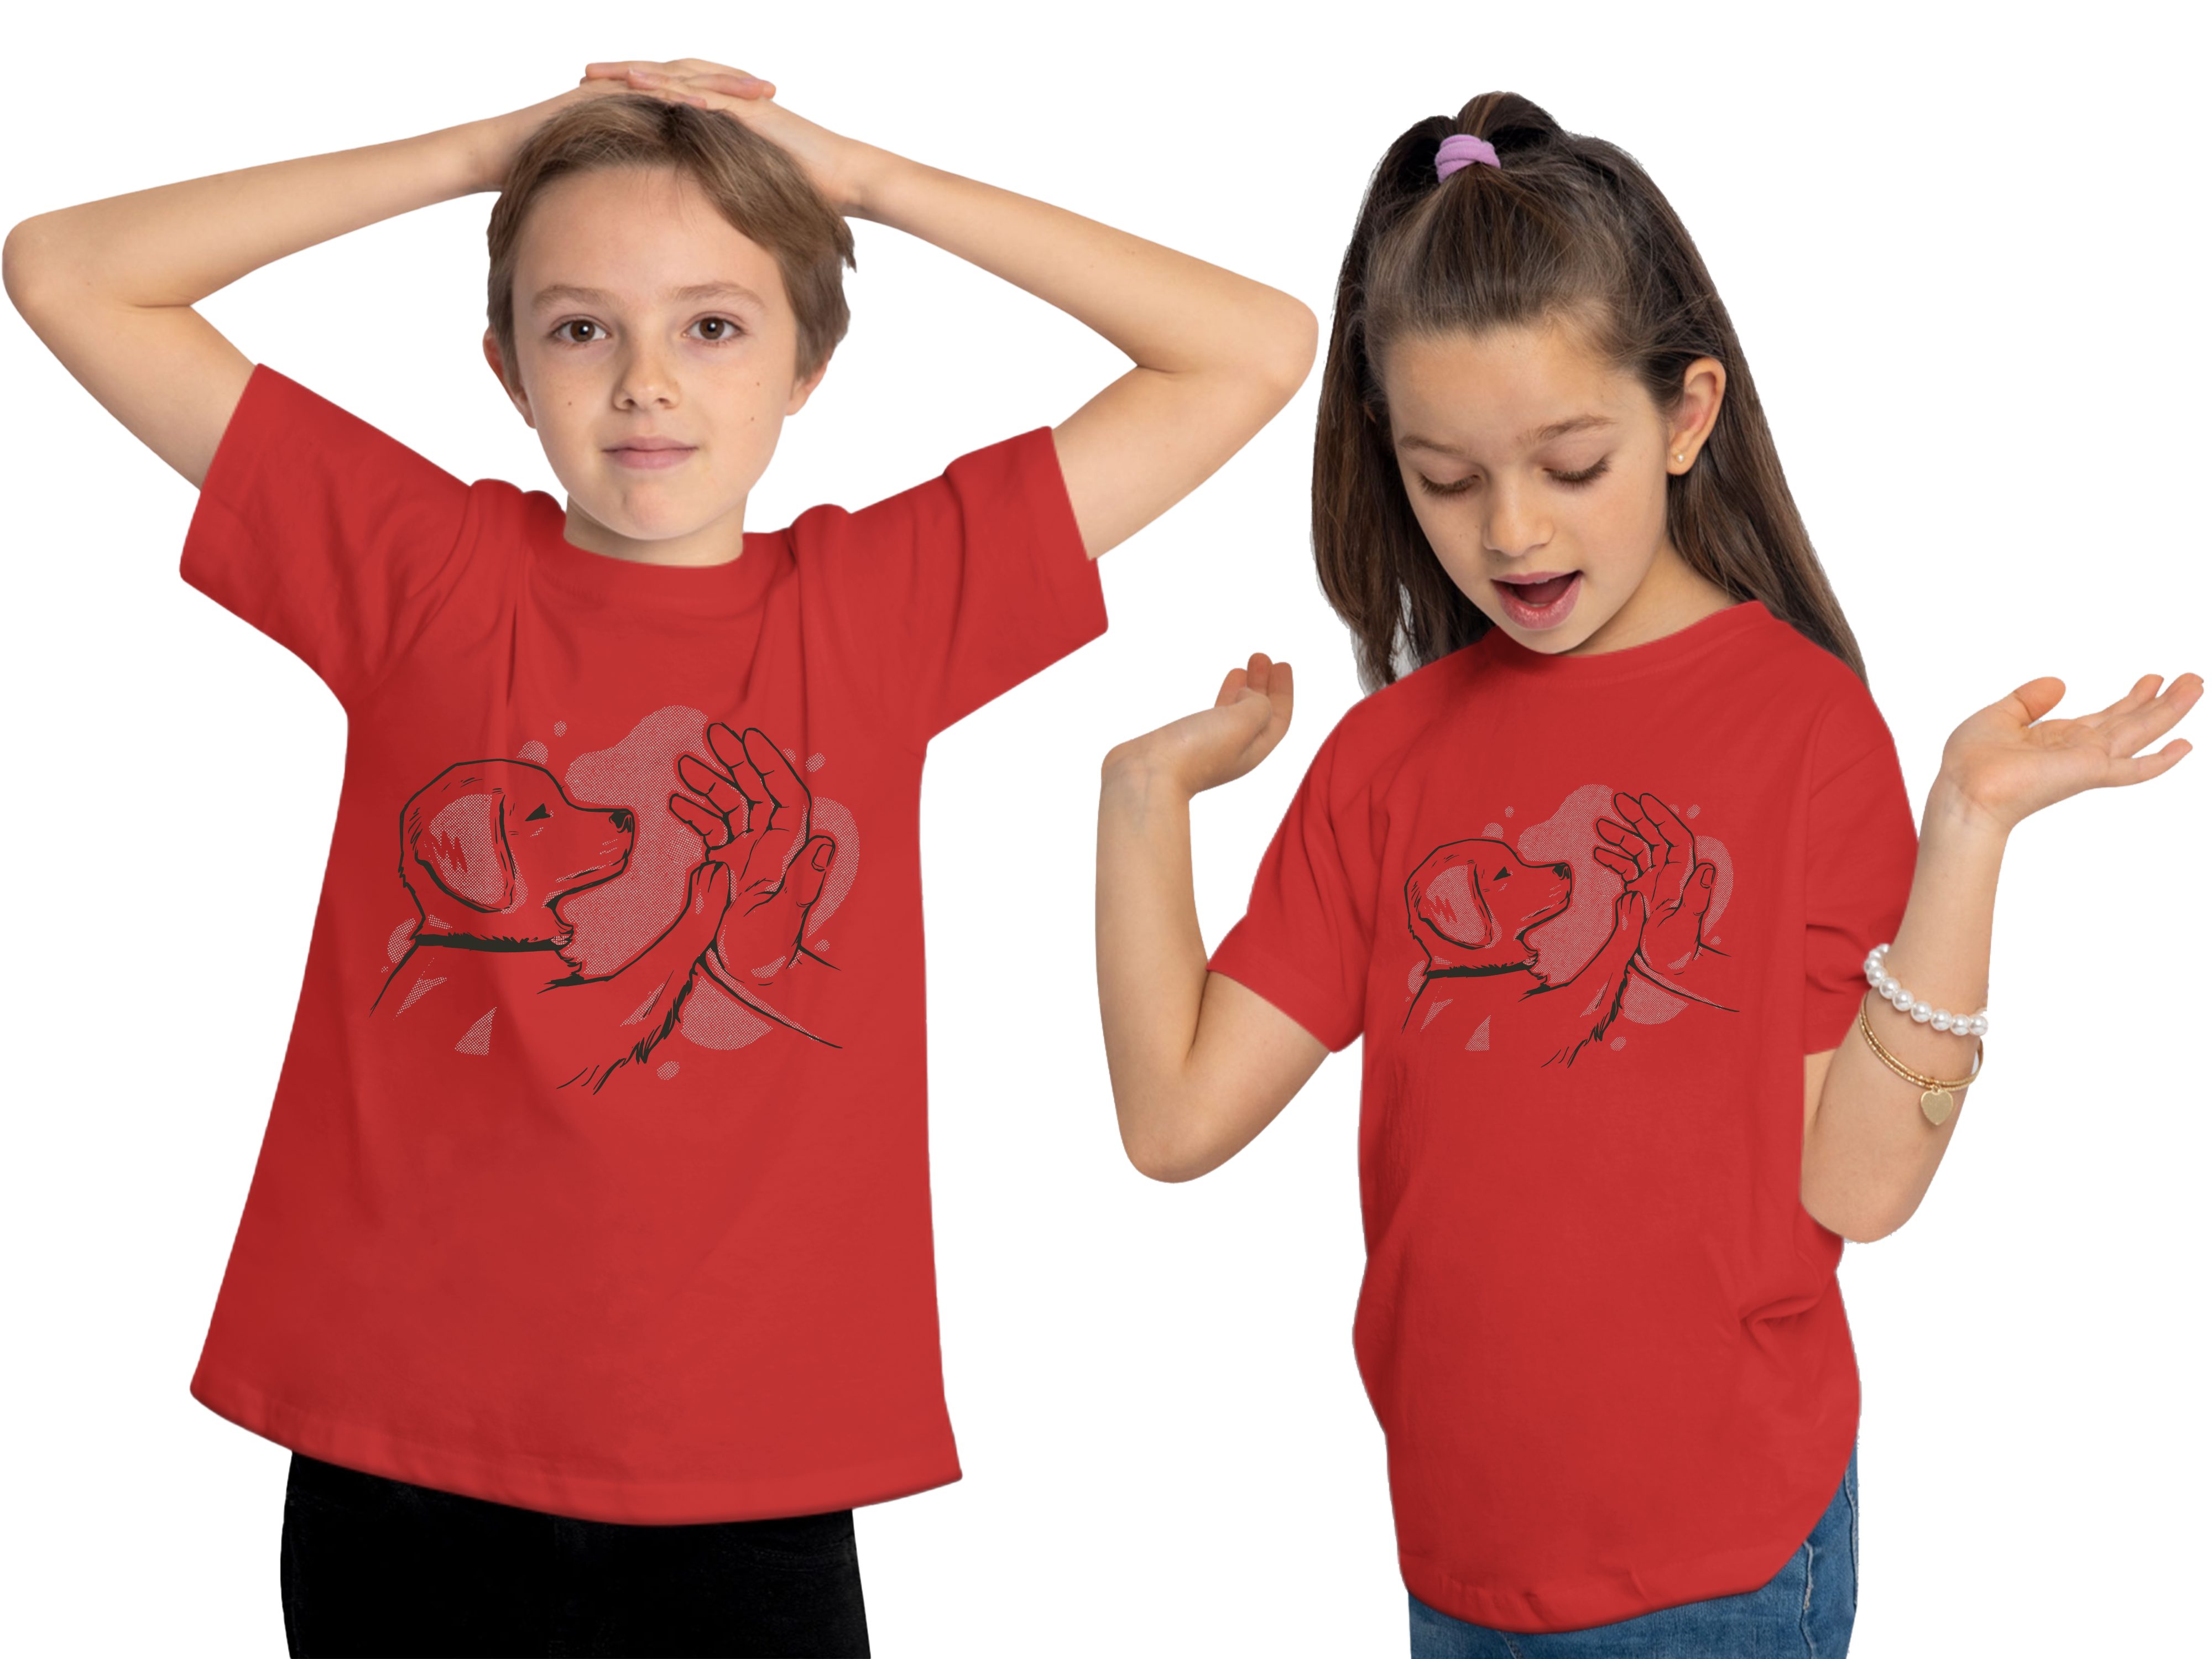 MyDesign24 Print-Shirt - T-Shirt gibt Kinder der rot Baumwollshirt Hunde i241 Welpe Labrador Aufdruck, bedruckt mit Pfötchen